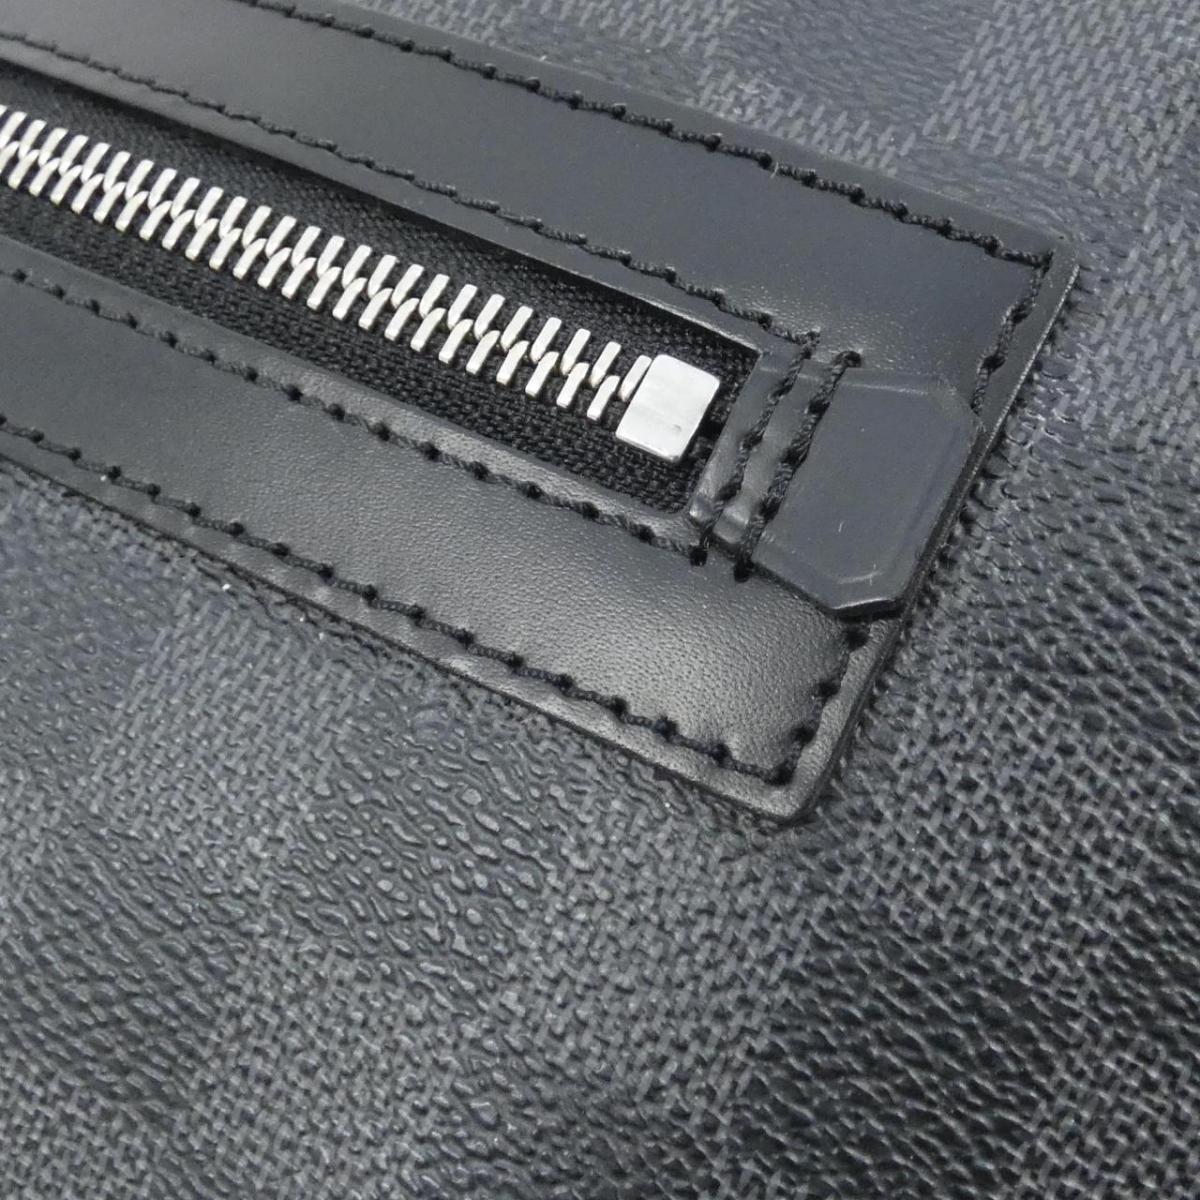 Louis Vuitton Damier Graphite Mick MM N41106 Shoulder Bag